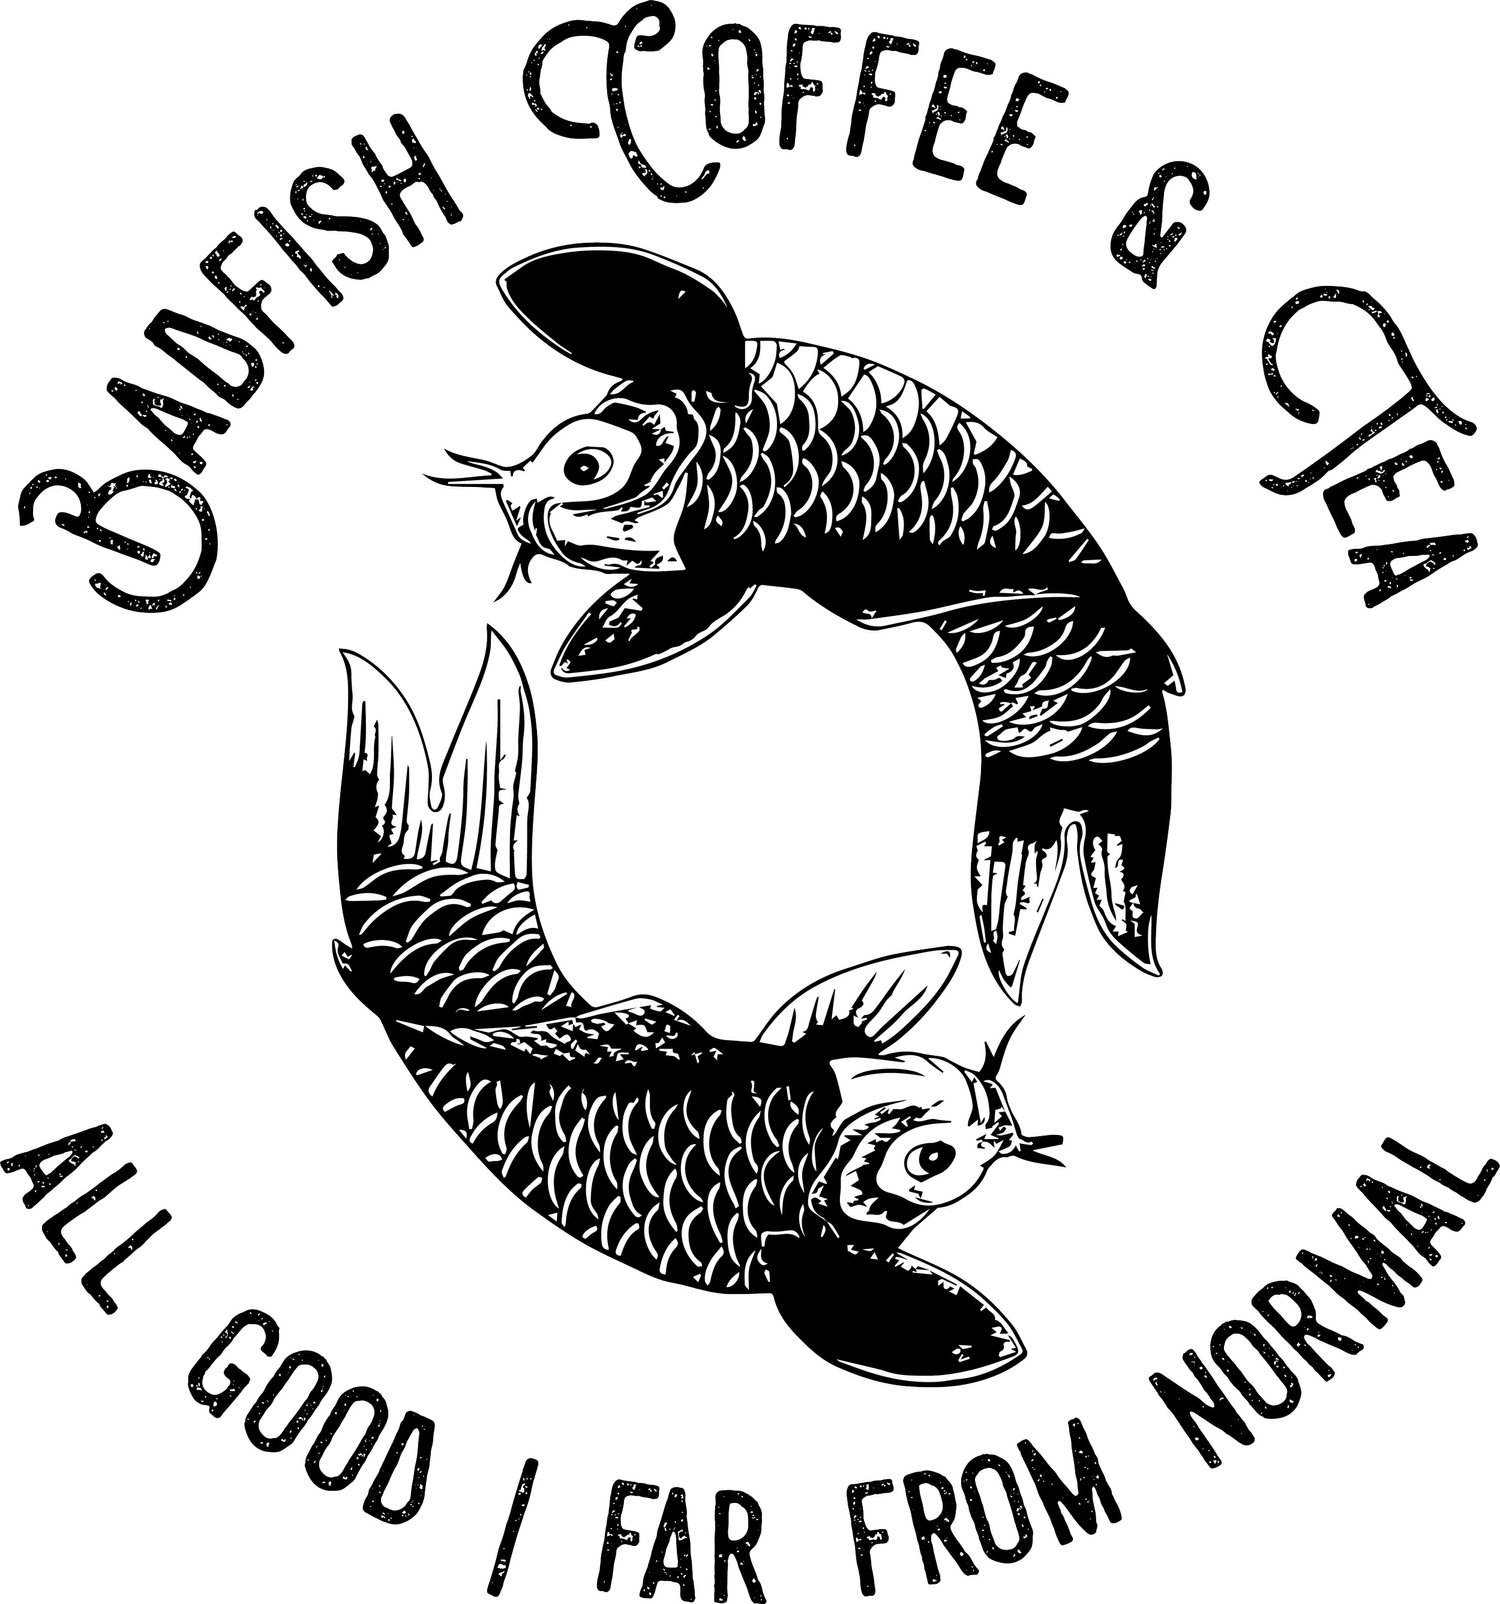 BADFISH COFFEE & TEA